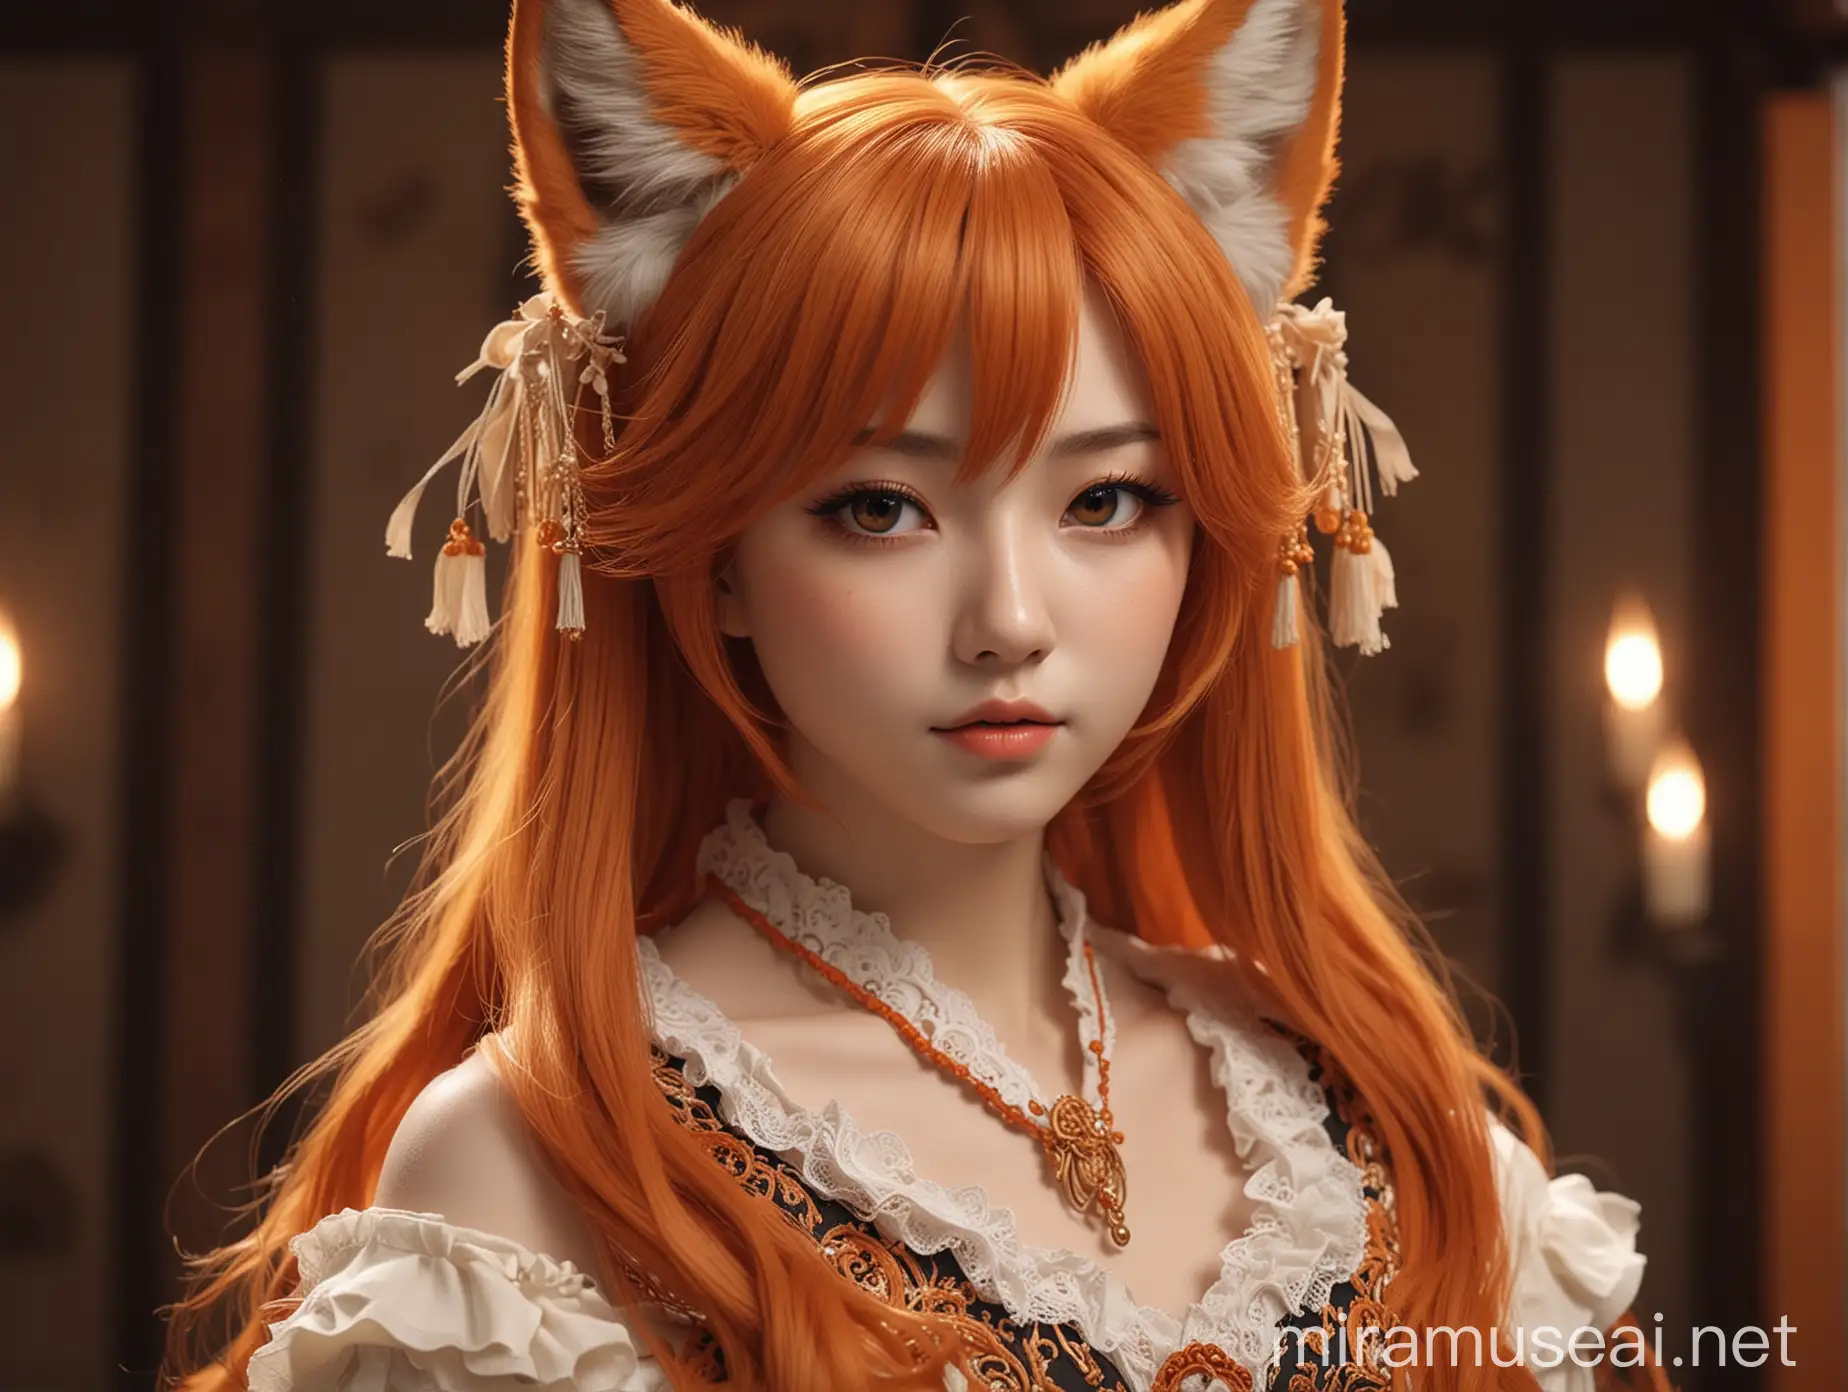 Realistic Kitsune Maiden Portrait in Temple Setting with Studio Lighting